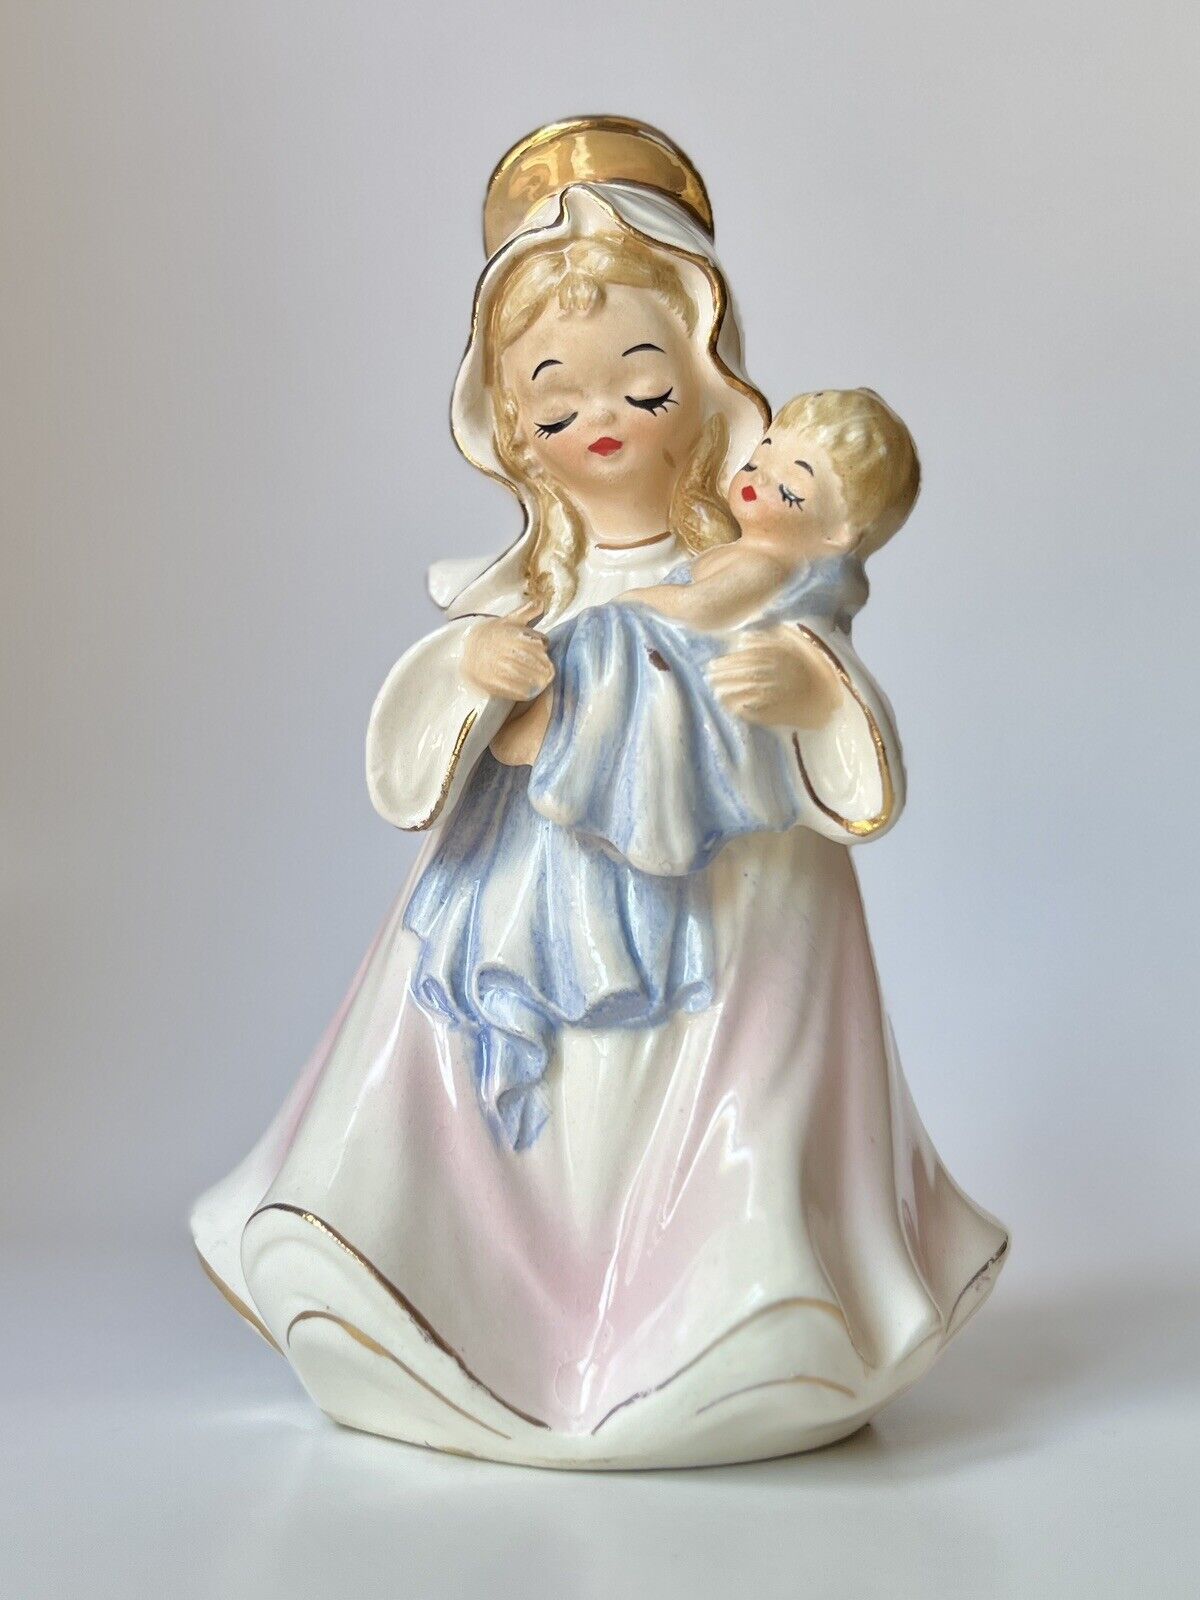 Vintage Josef Originals Virgin Mary Mother Madonna Baby Jesus Figurine Christmas